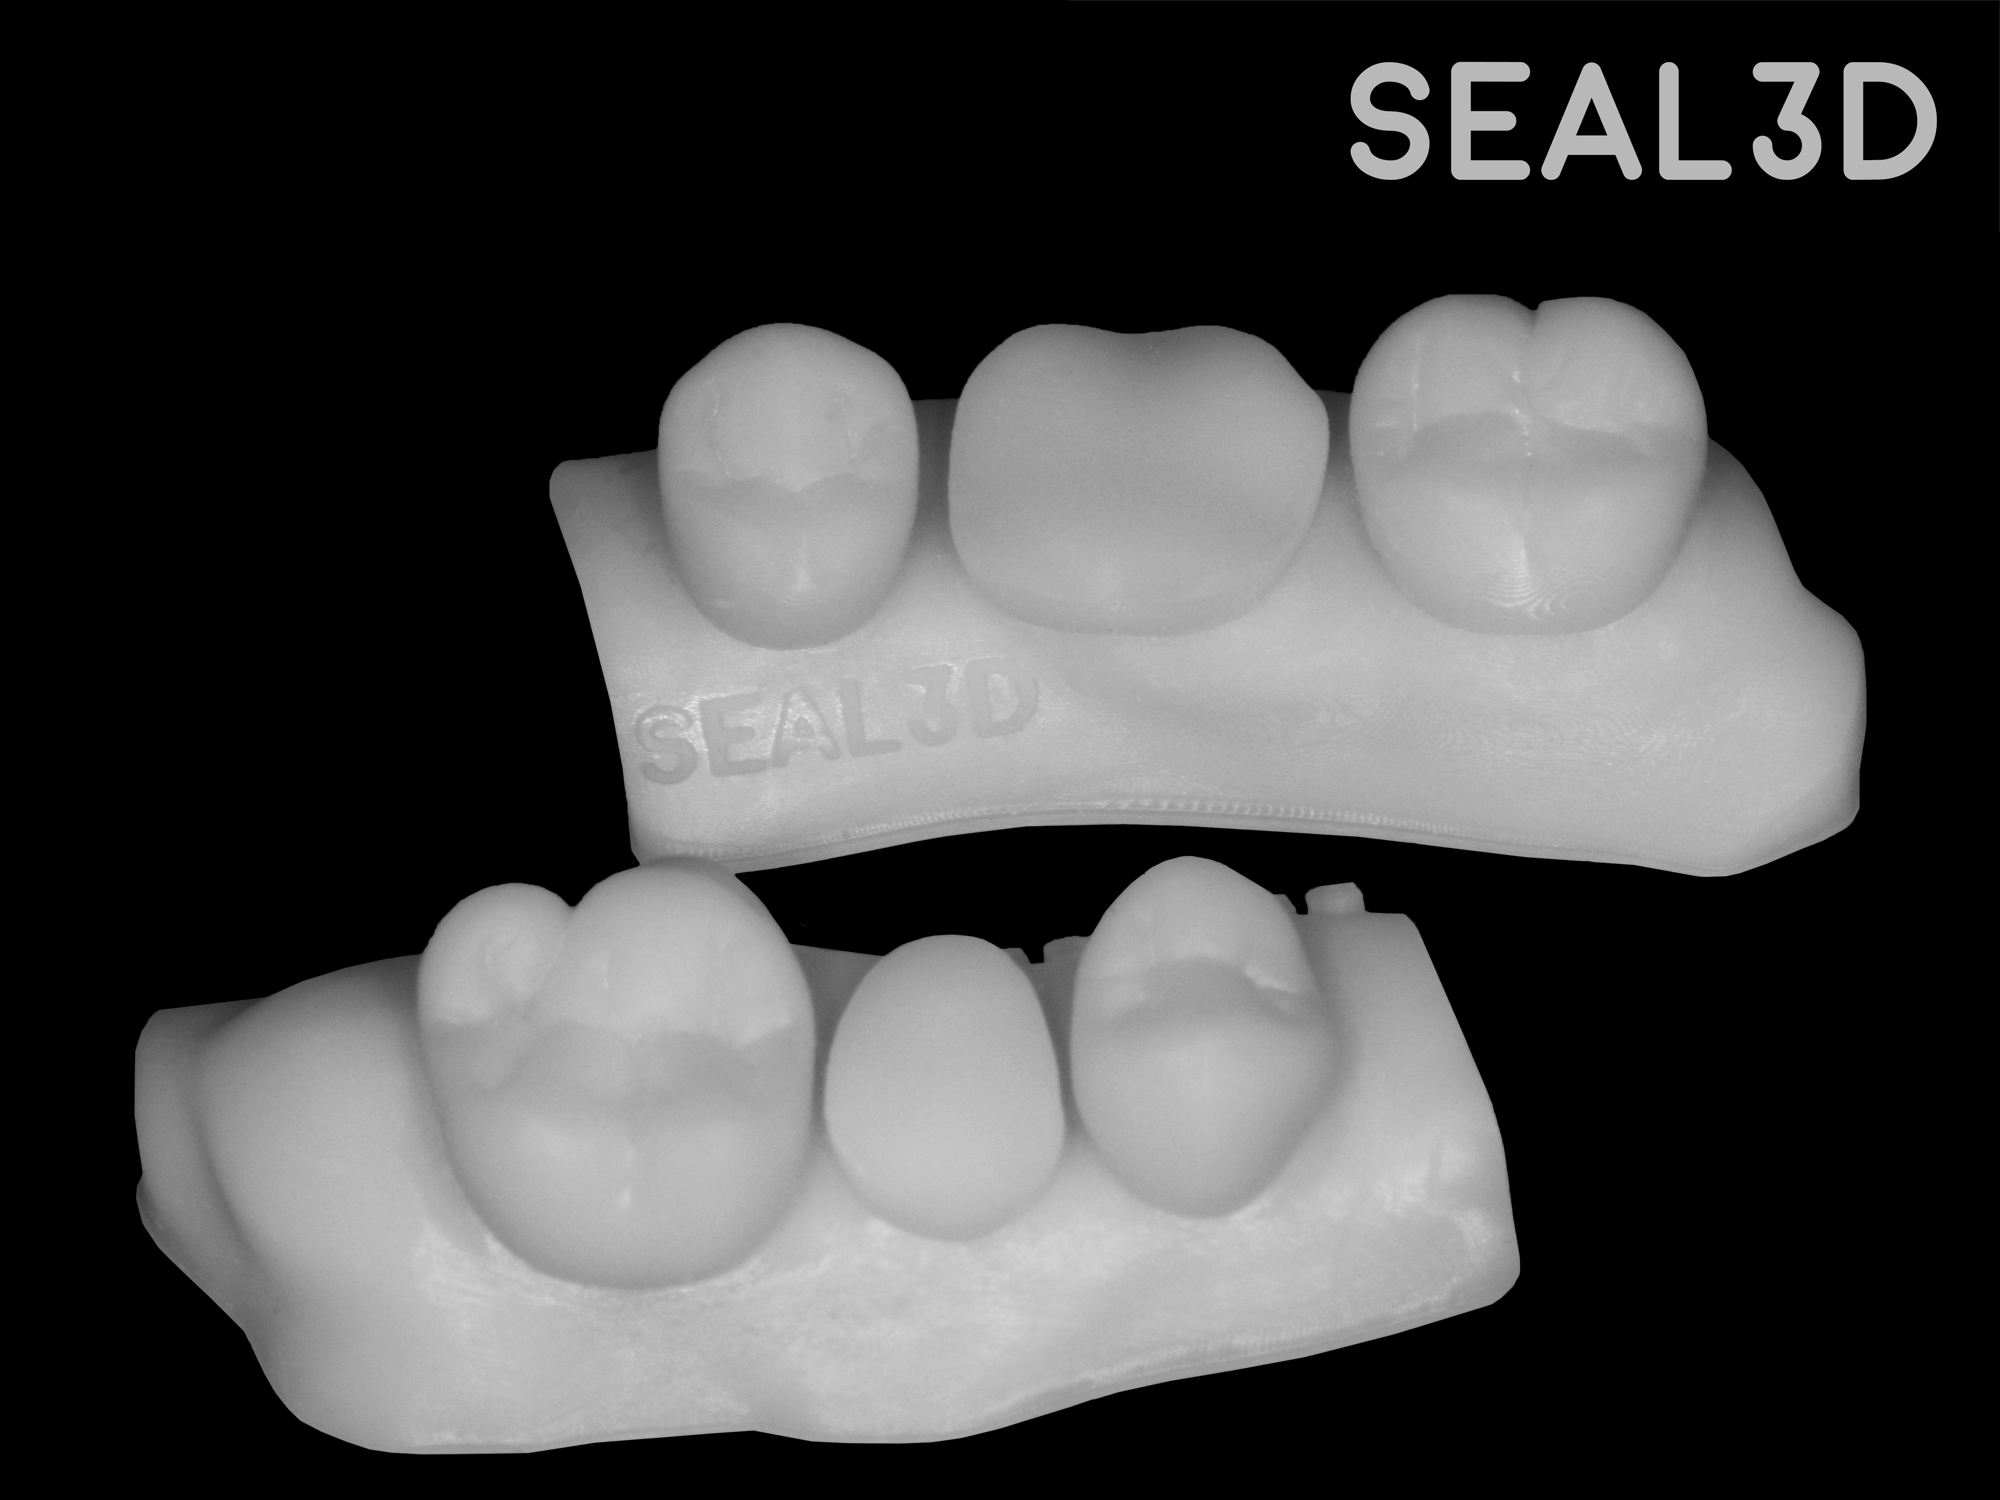 Modely Seal 3D na stáži zo zubnej protetiky